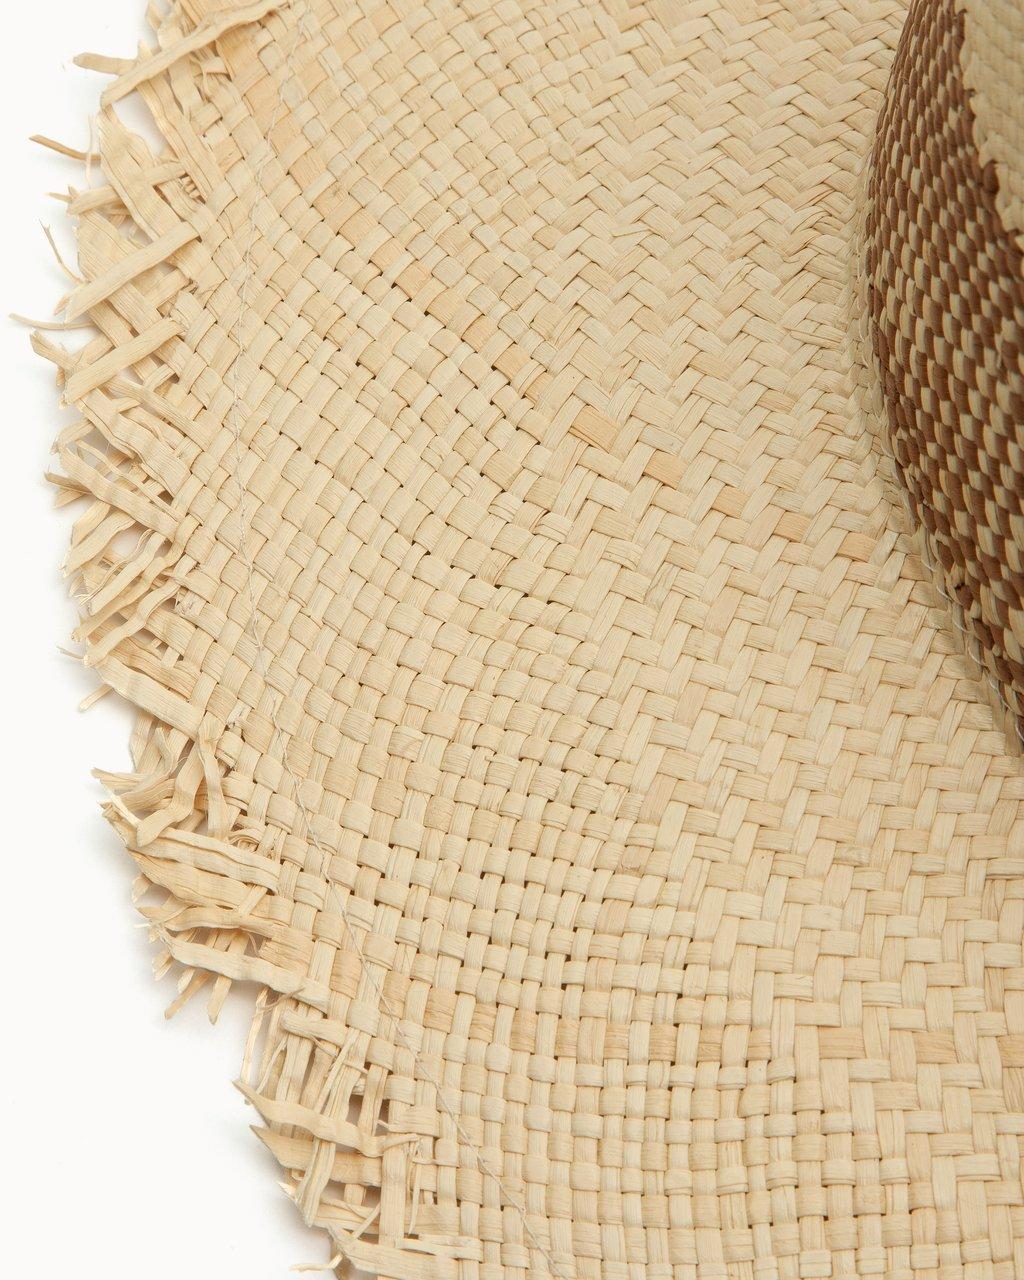 Frayed Edge Straw Panama Hat | rag & bone